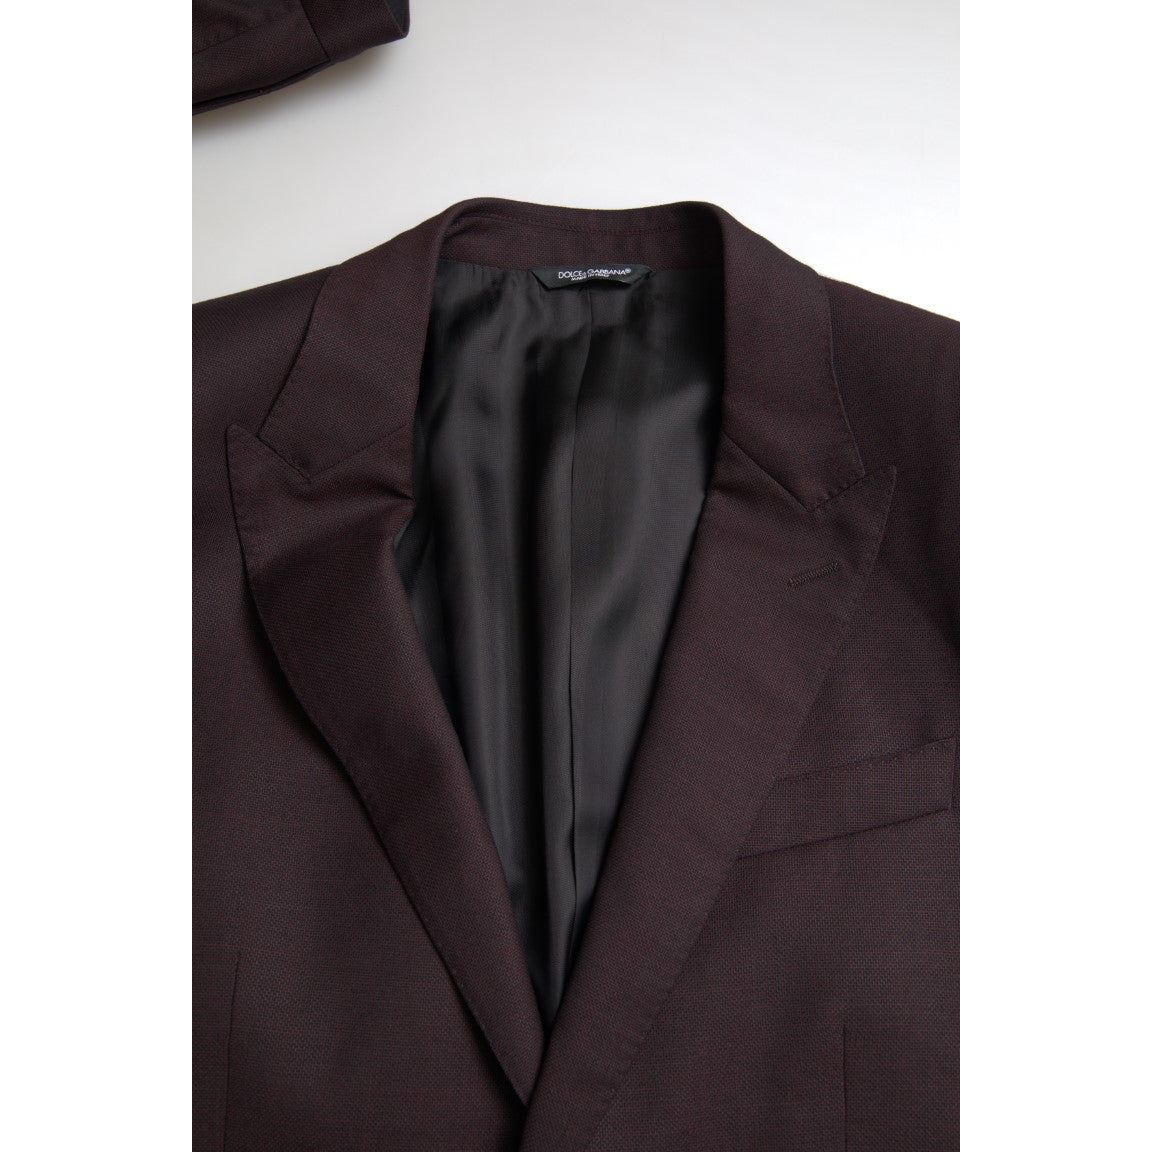 Dolce & Gabbana Maroon Martini Slim Fit 2-Piece Suit maroon-2-piece-single-breasted-martini-suit